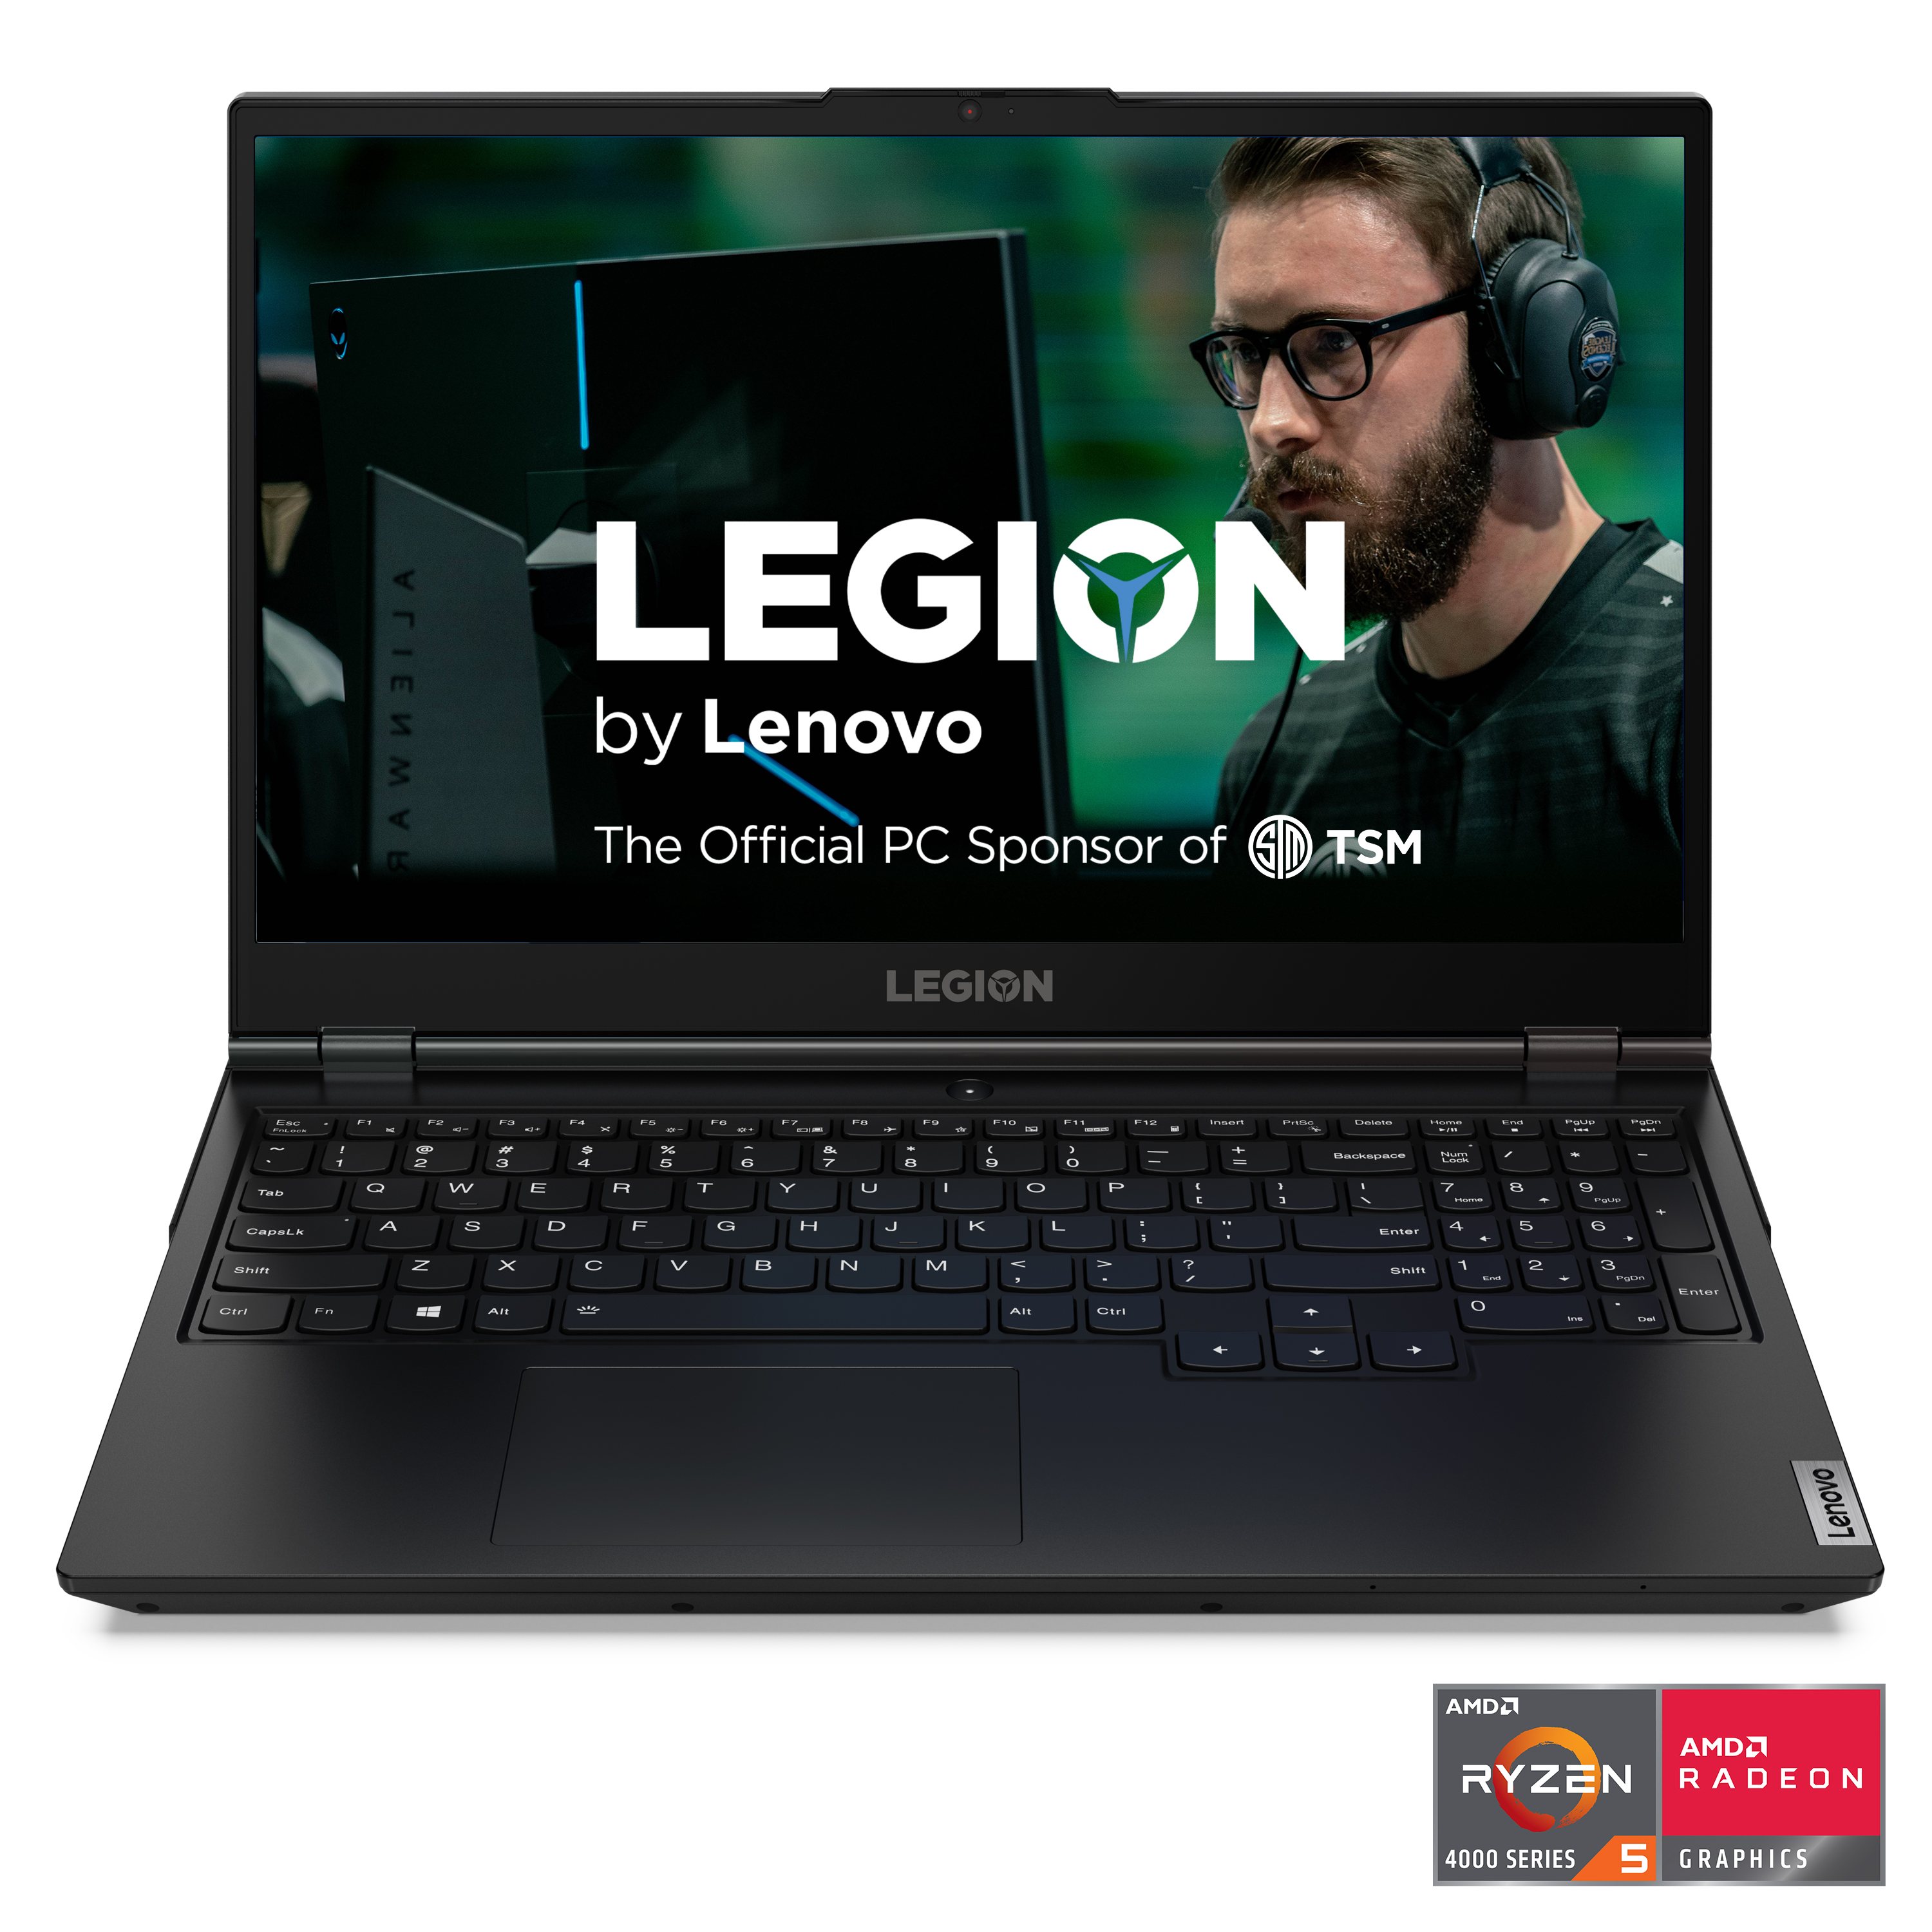 Lenovo Legion 5, 15.6" FHD, AMD Ryzen 5 4600H, NVIDIA GeForce GTX 1650Ti, 8GB, 256GB SSD + 1TB HD, Phantom Black, Windows 10 Home, 82B5001XUS - image 19 of 19